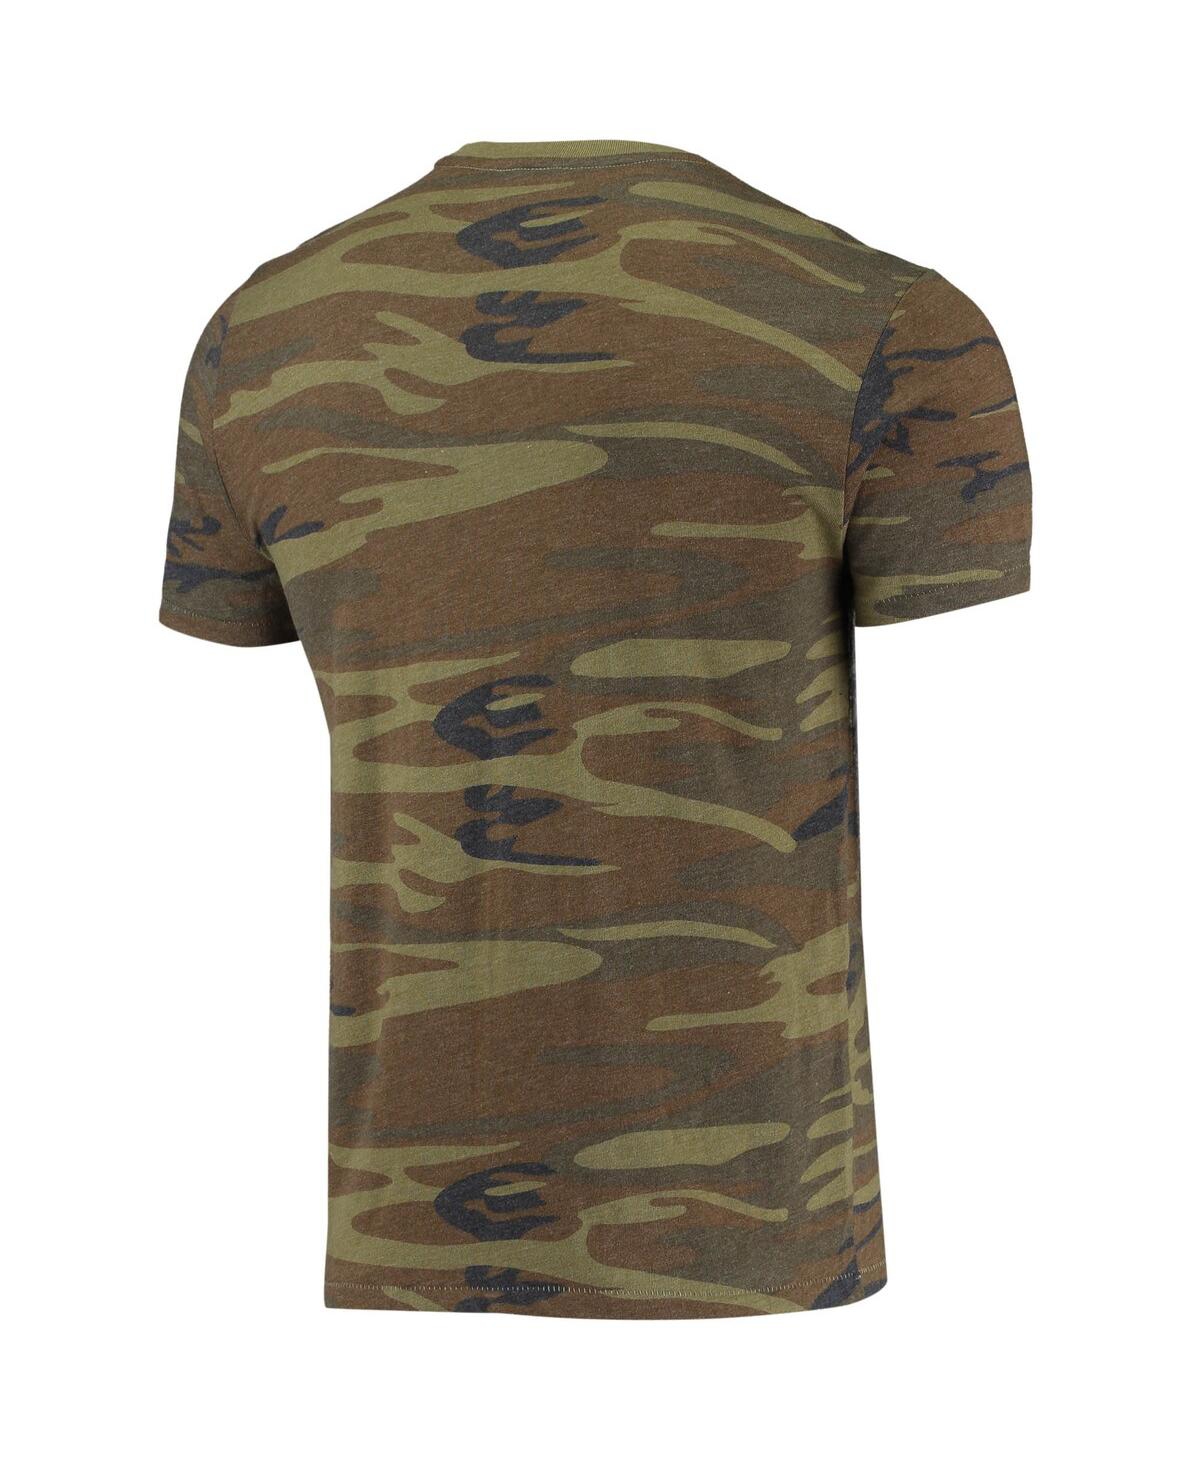 Shop Alternative Apparel Men's  Camo Illinois Fighting Illini Arch Logo Tri-blend T-shirt